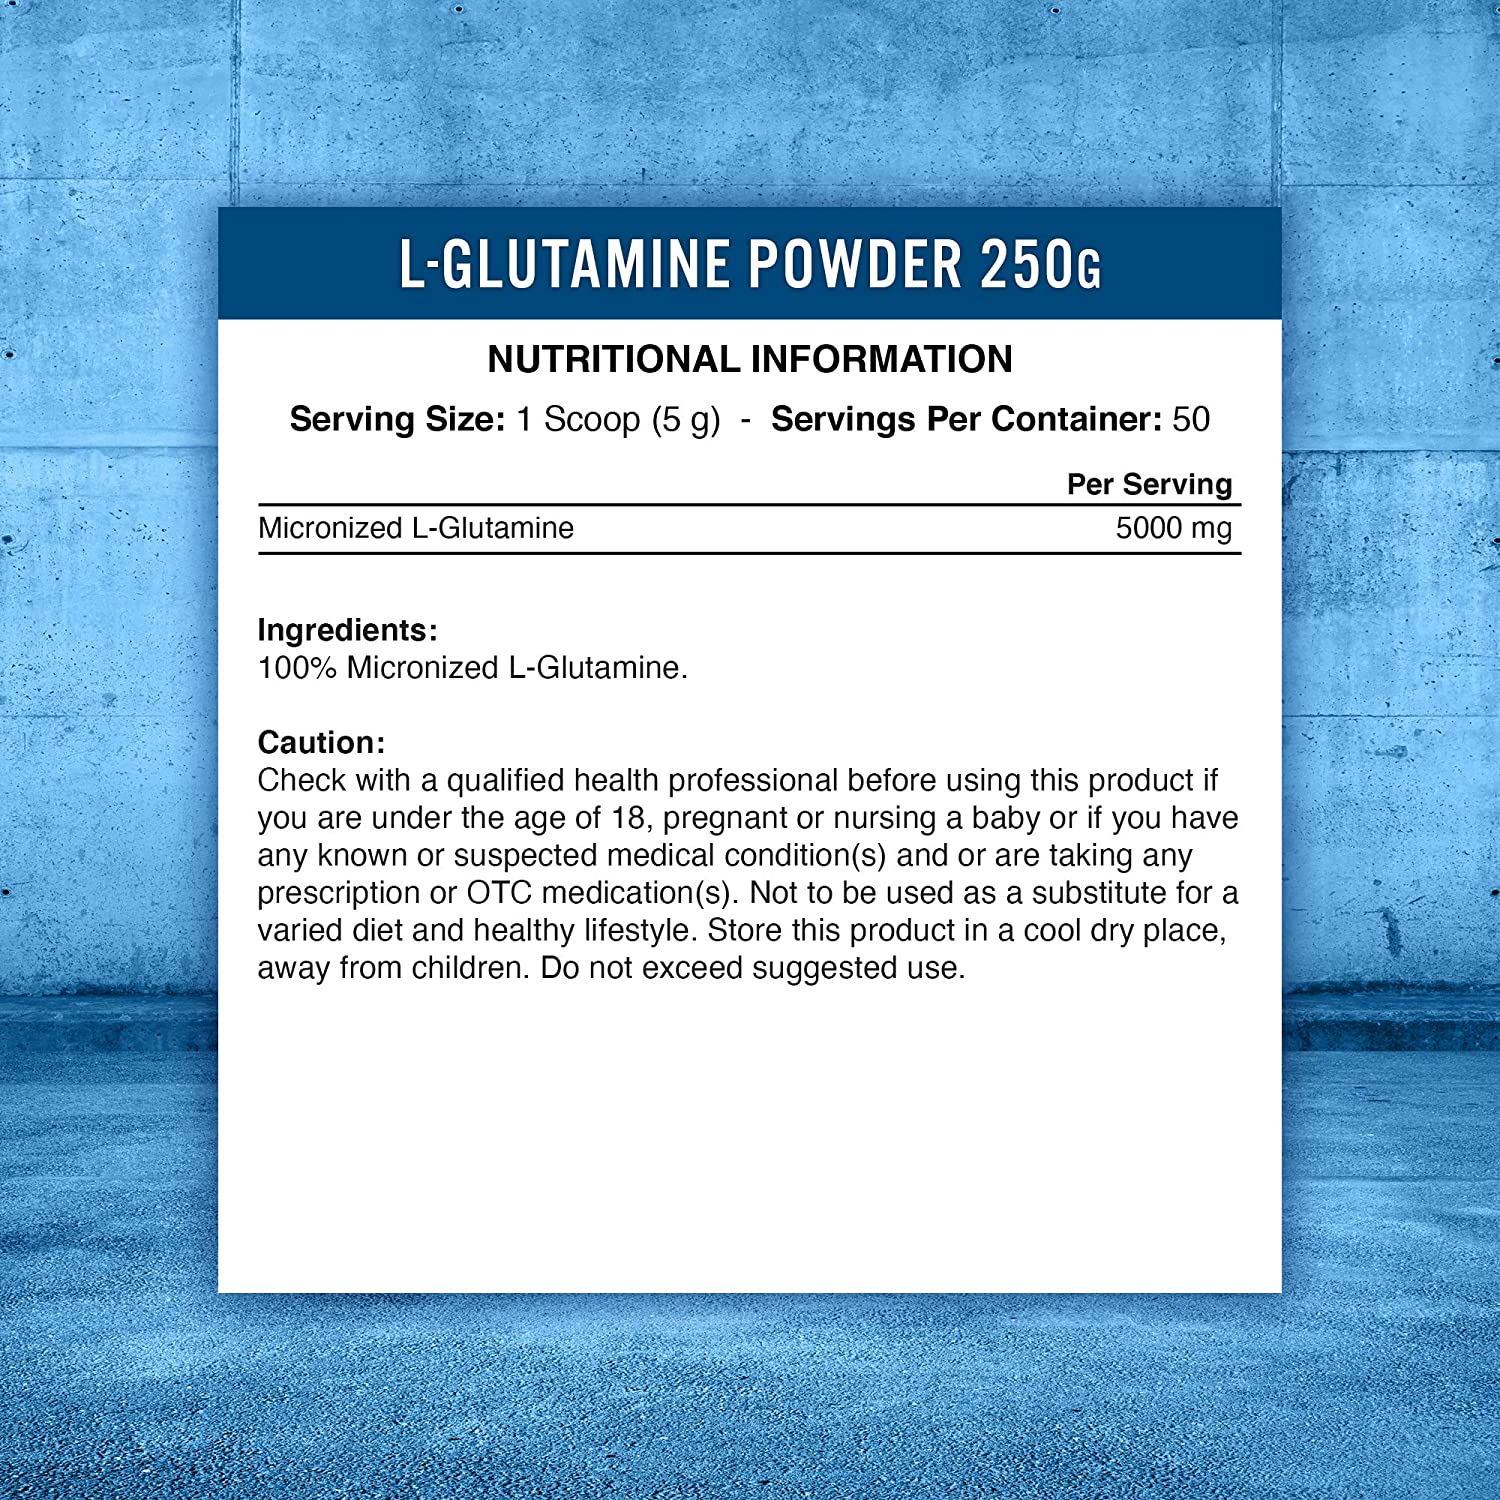 Applied Nutrition L-Glutamine Powder, Micronized